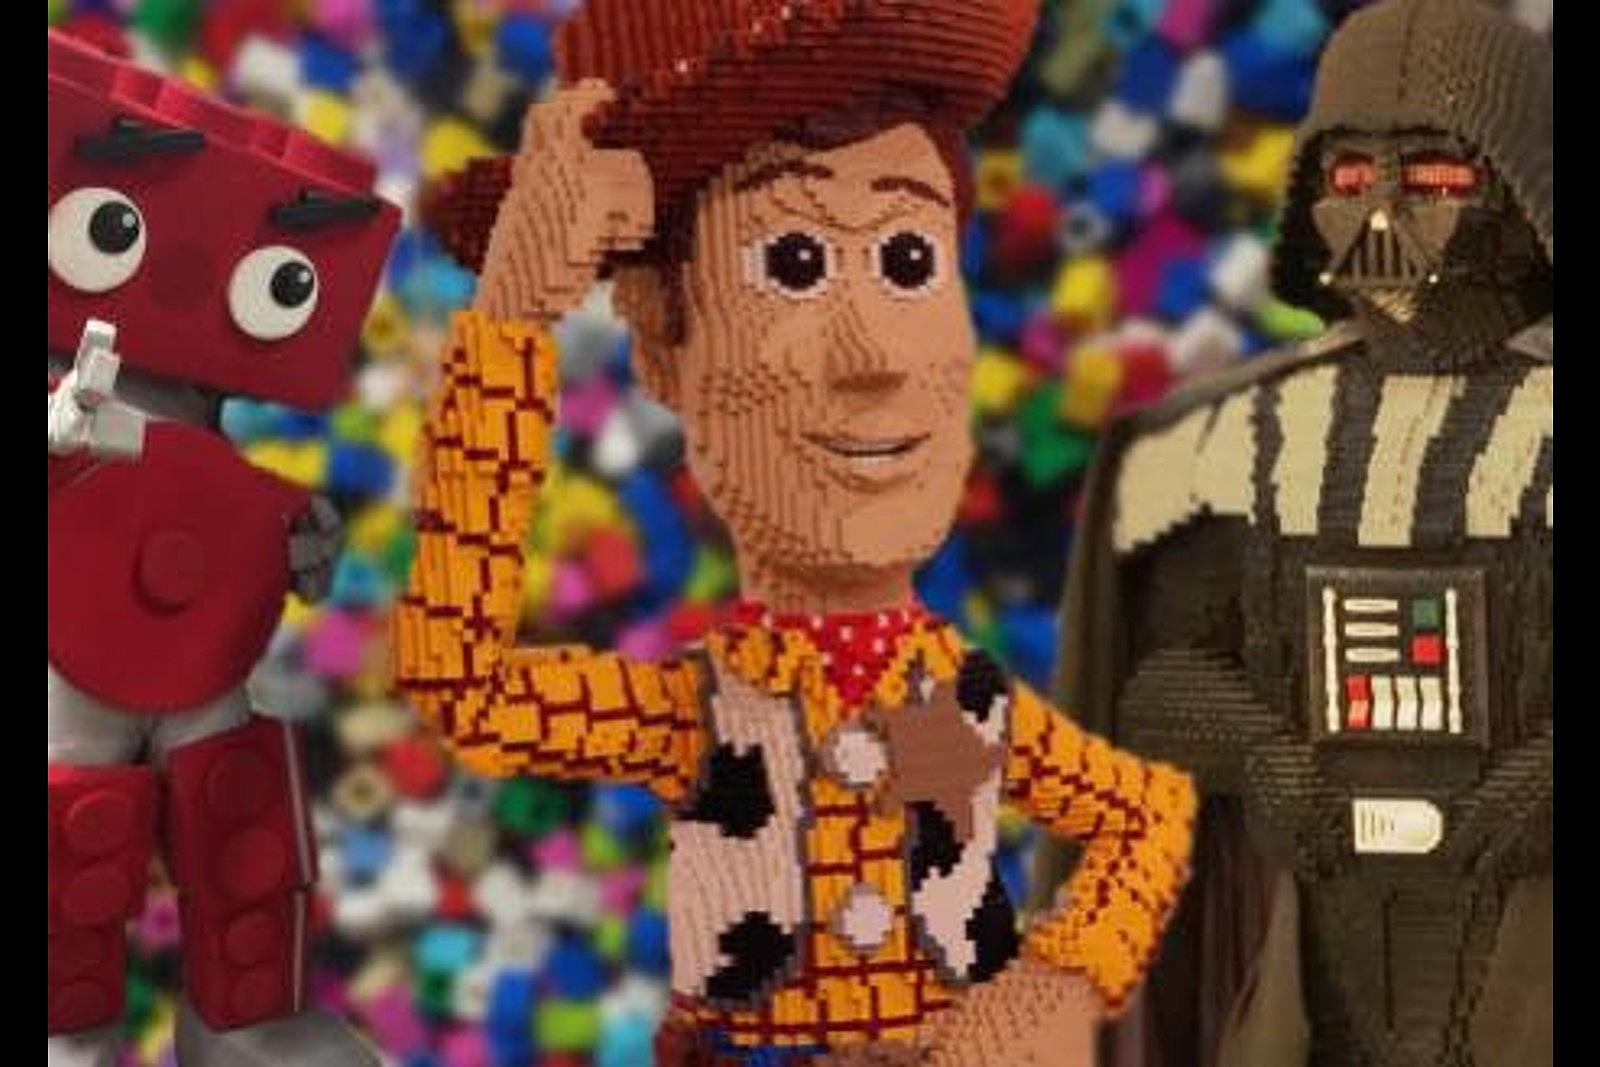 Brick Fest Live is returning to NJ, celebrating all things LEGO